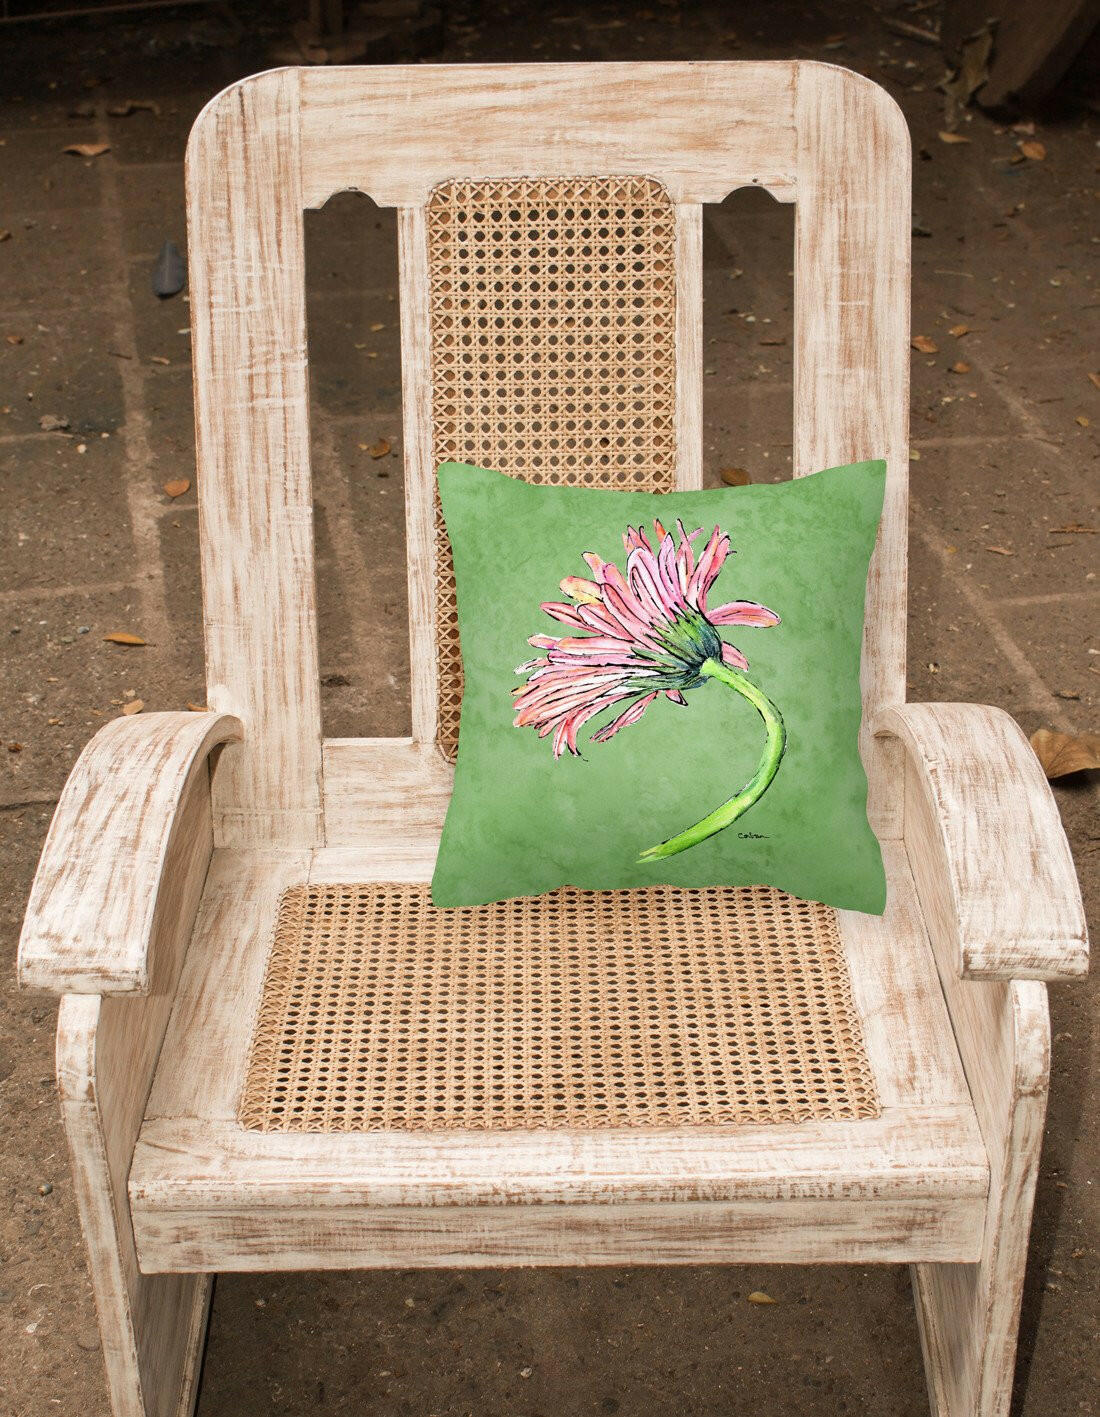 Gerber Daisy Pink   Canvas Fabric Decorative Pillow - the-store.com